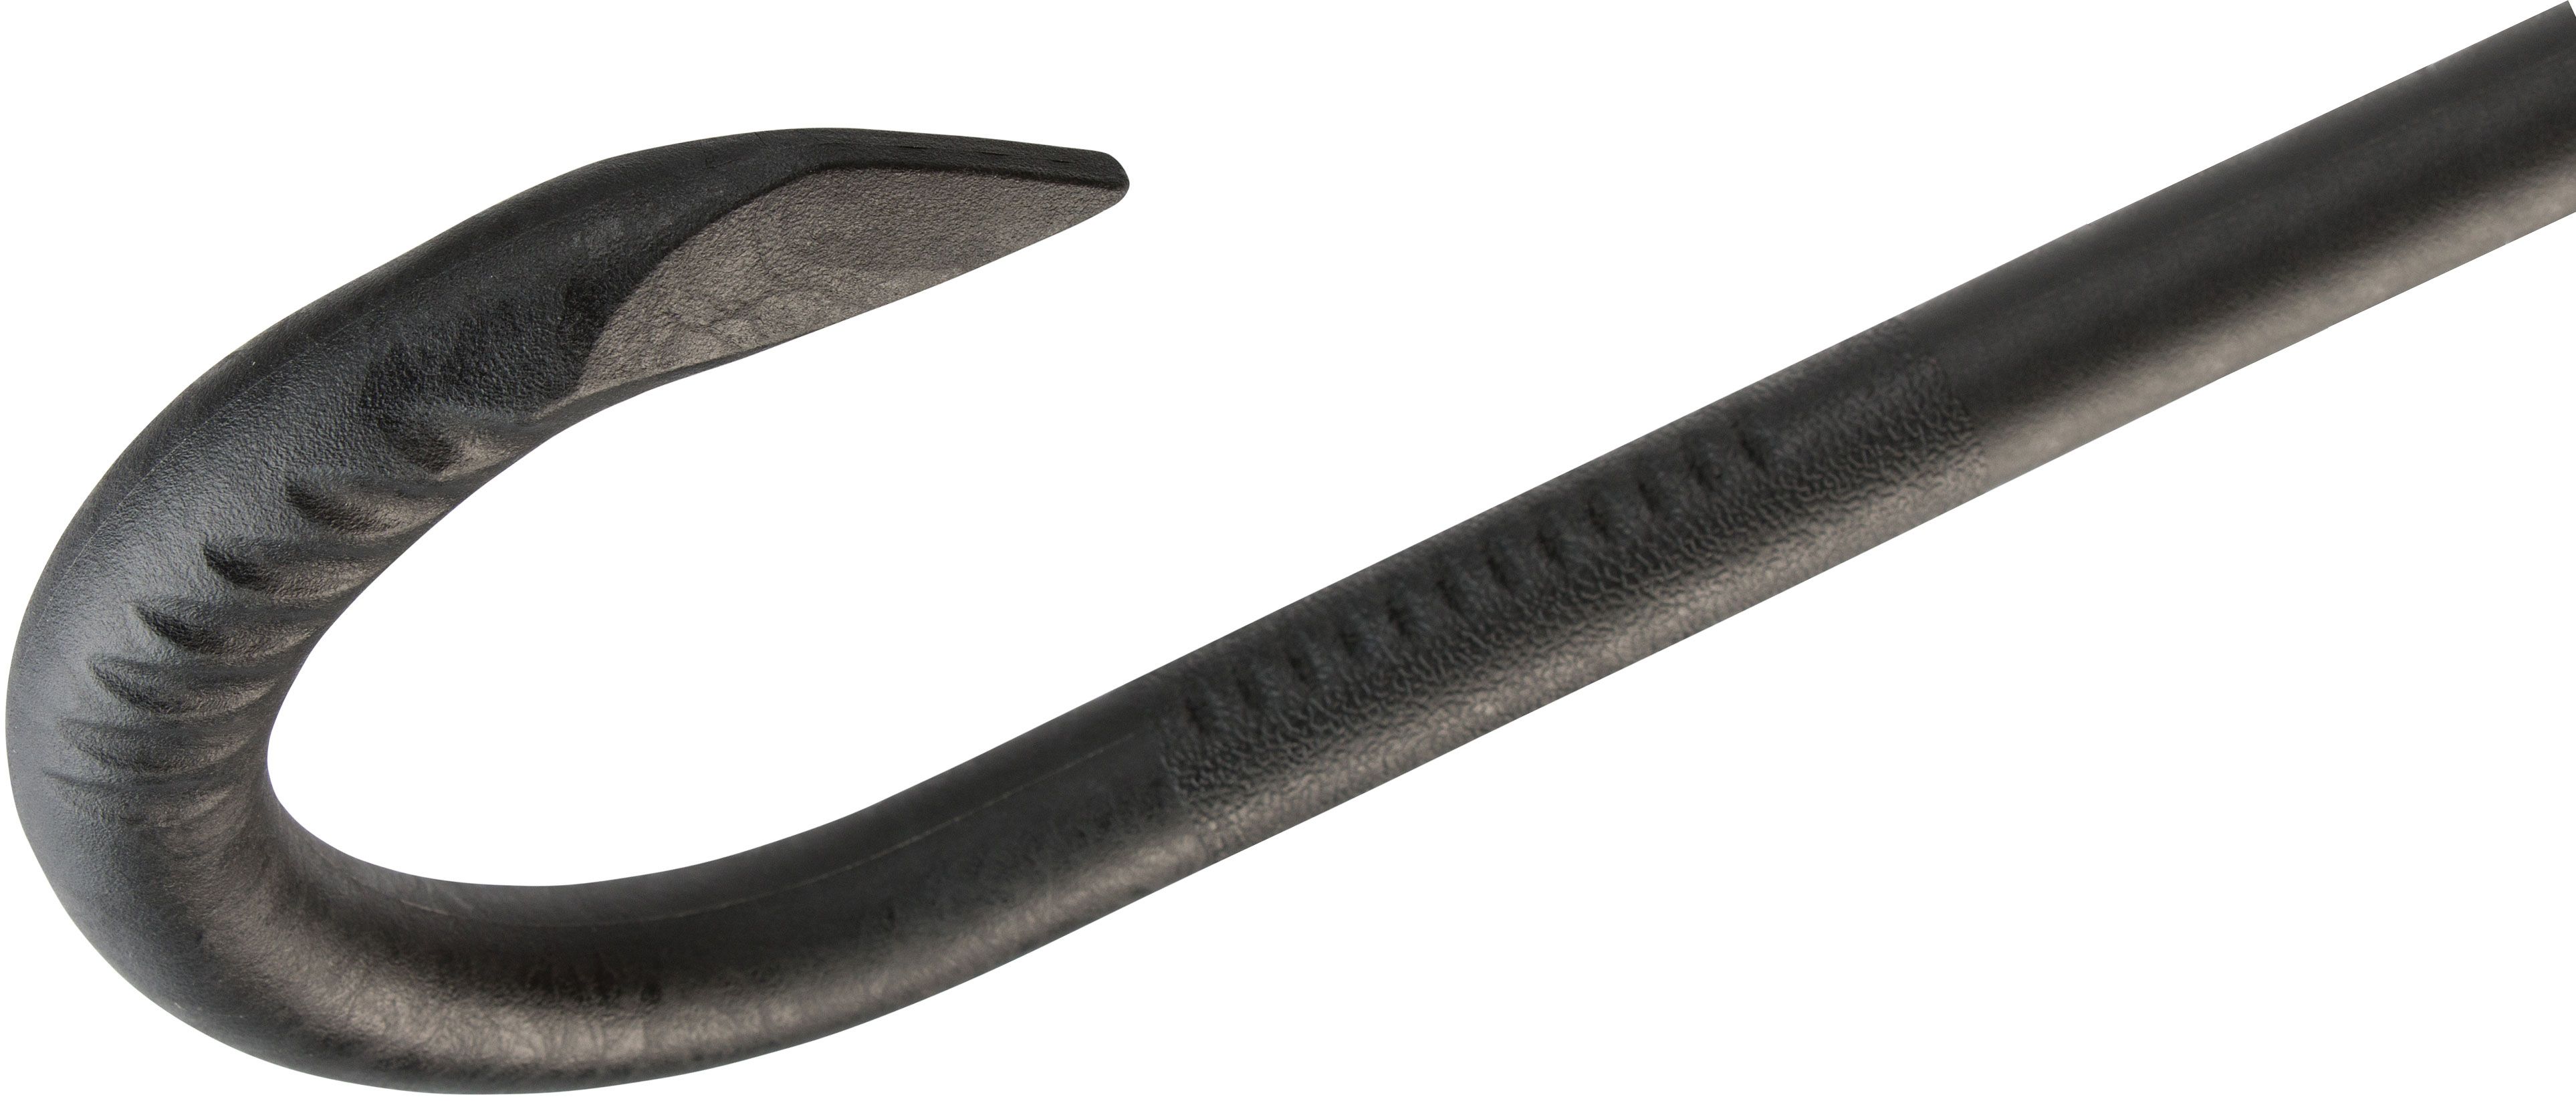 United Cutlery Defense Hook Cane Walking Stick 39" Adjustable UC3129 New 